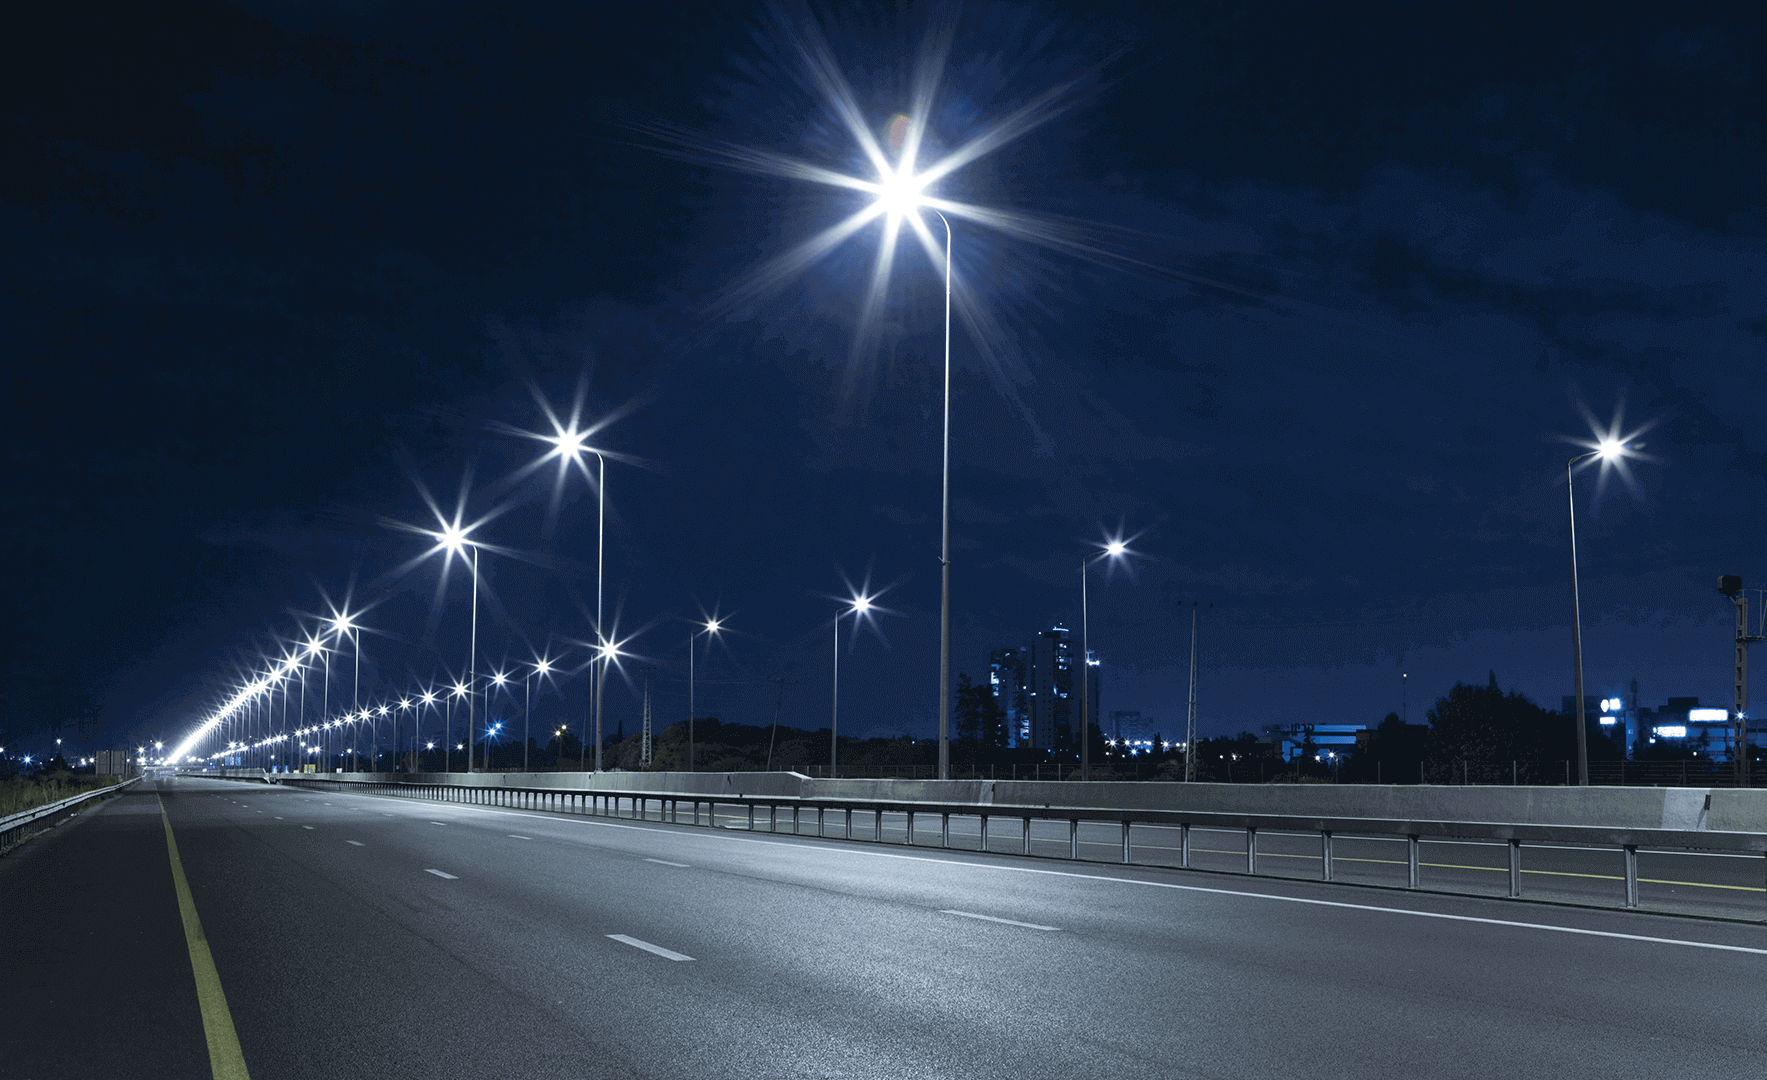 Illumination | Bajaj Electricals
